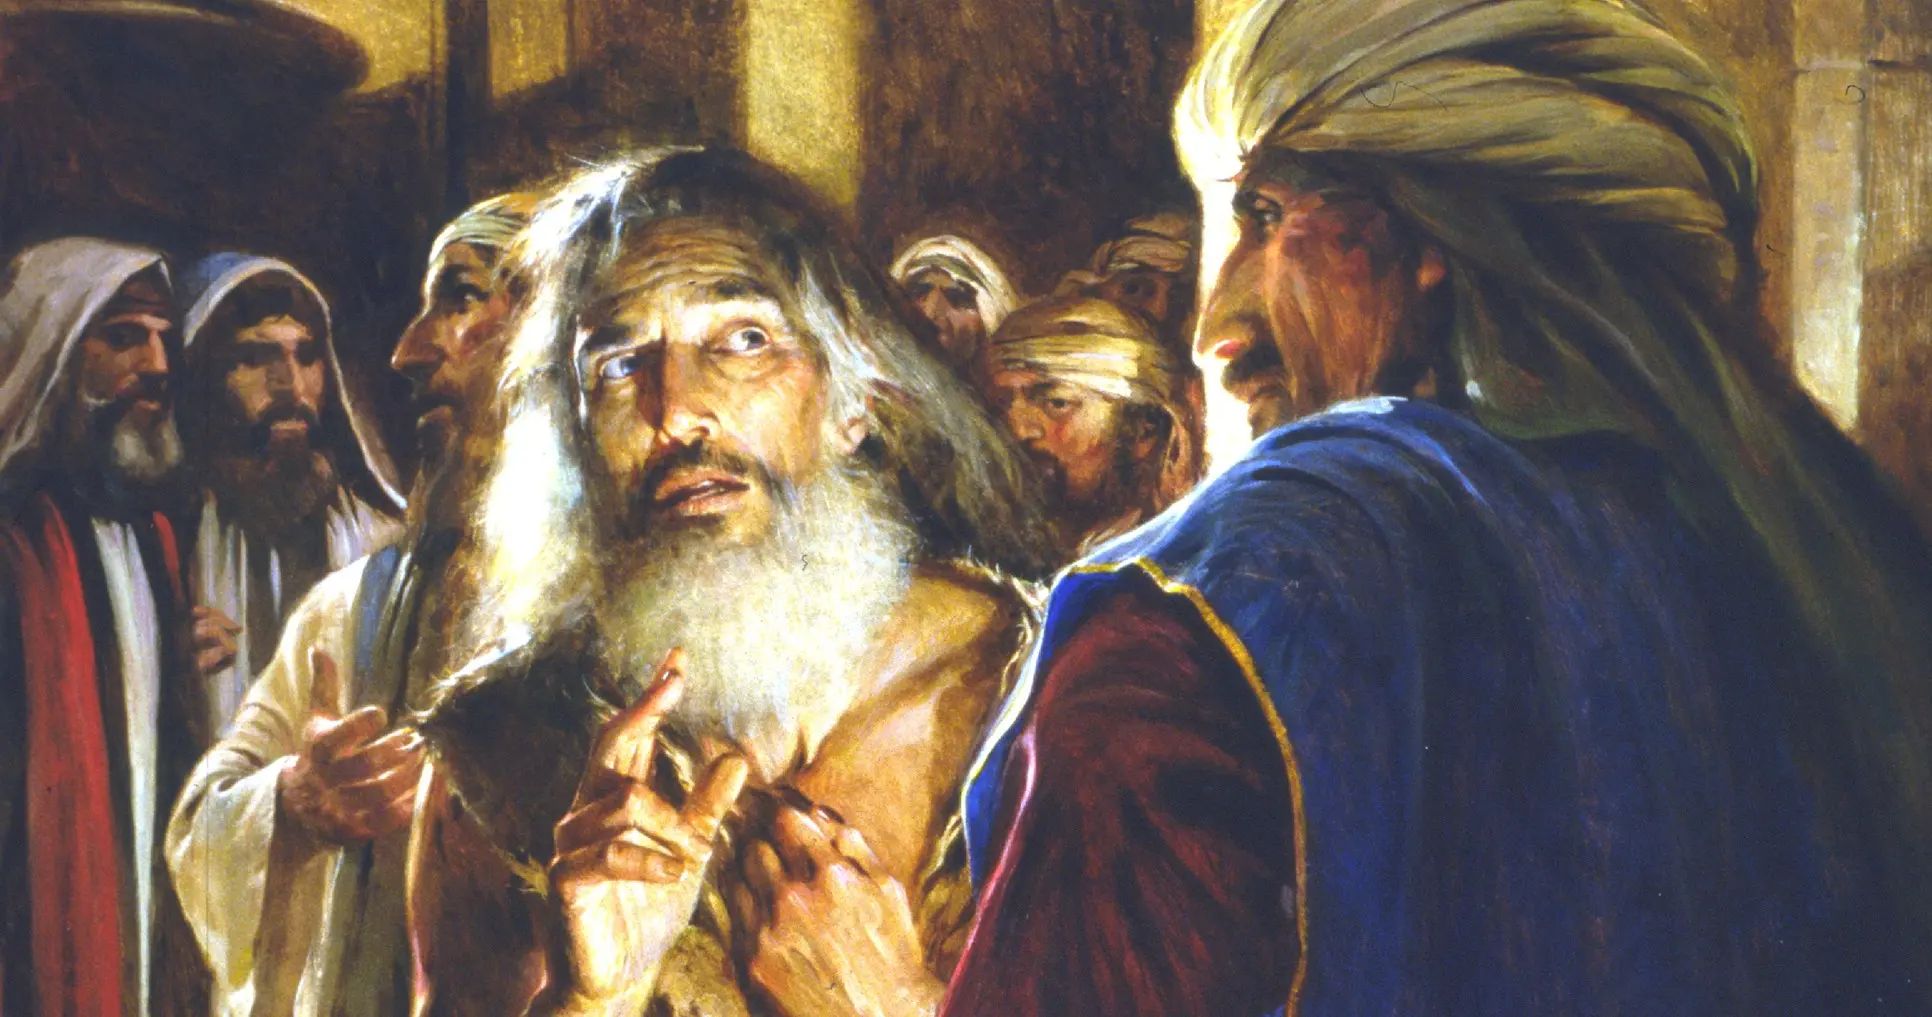 Jeremiah, by Walter Rane. Image via Church of Jesus Christ.